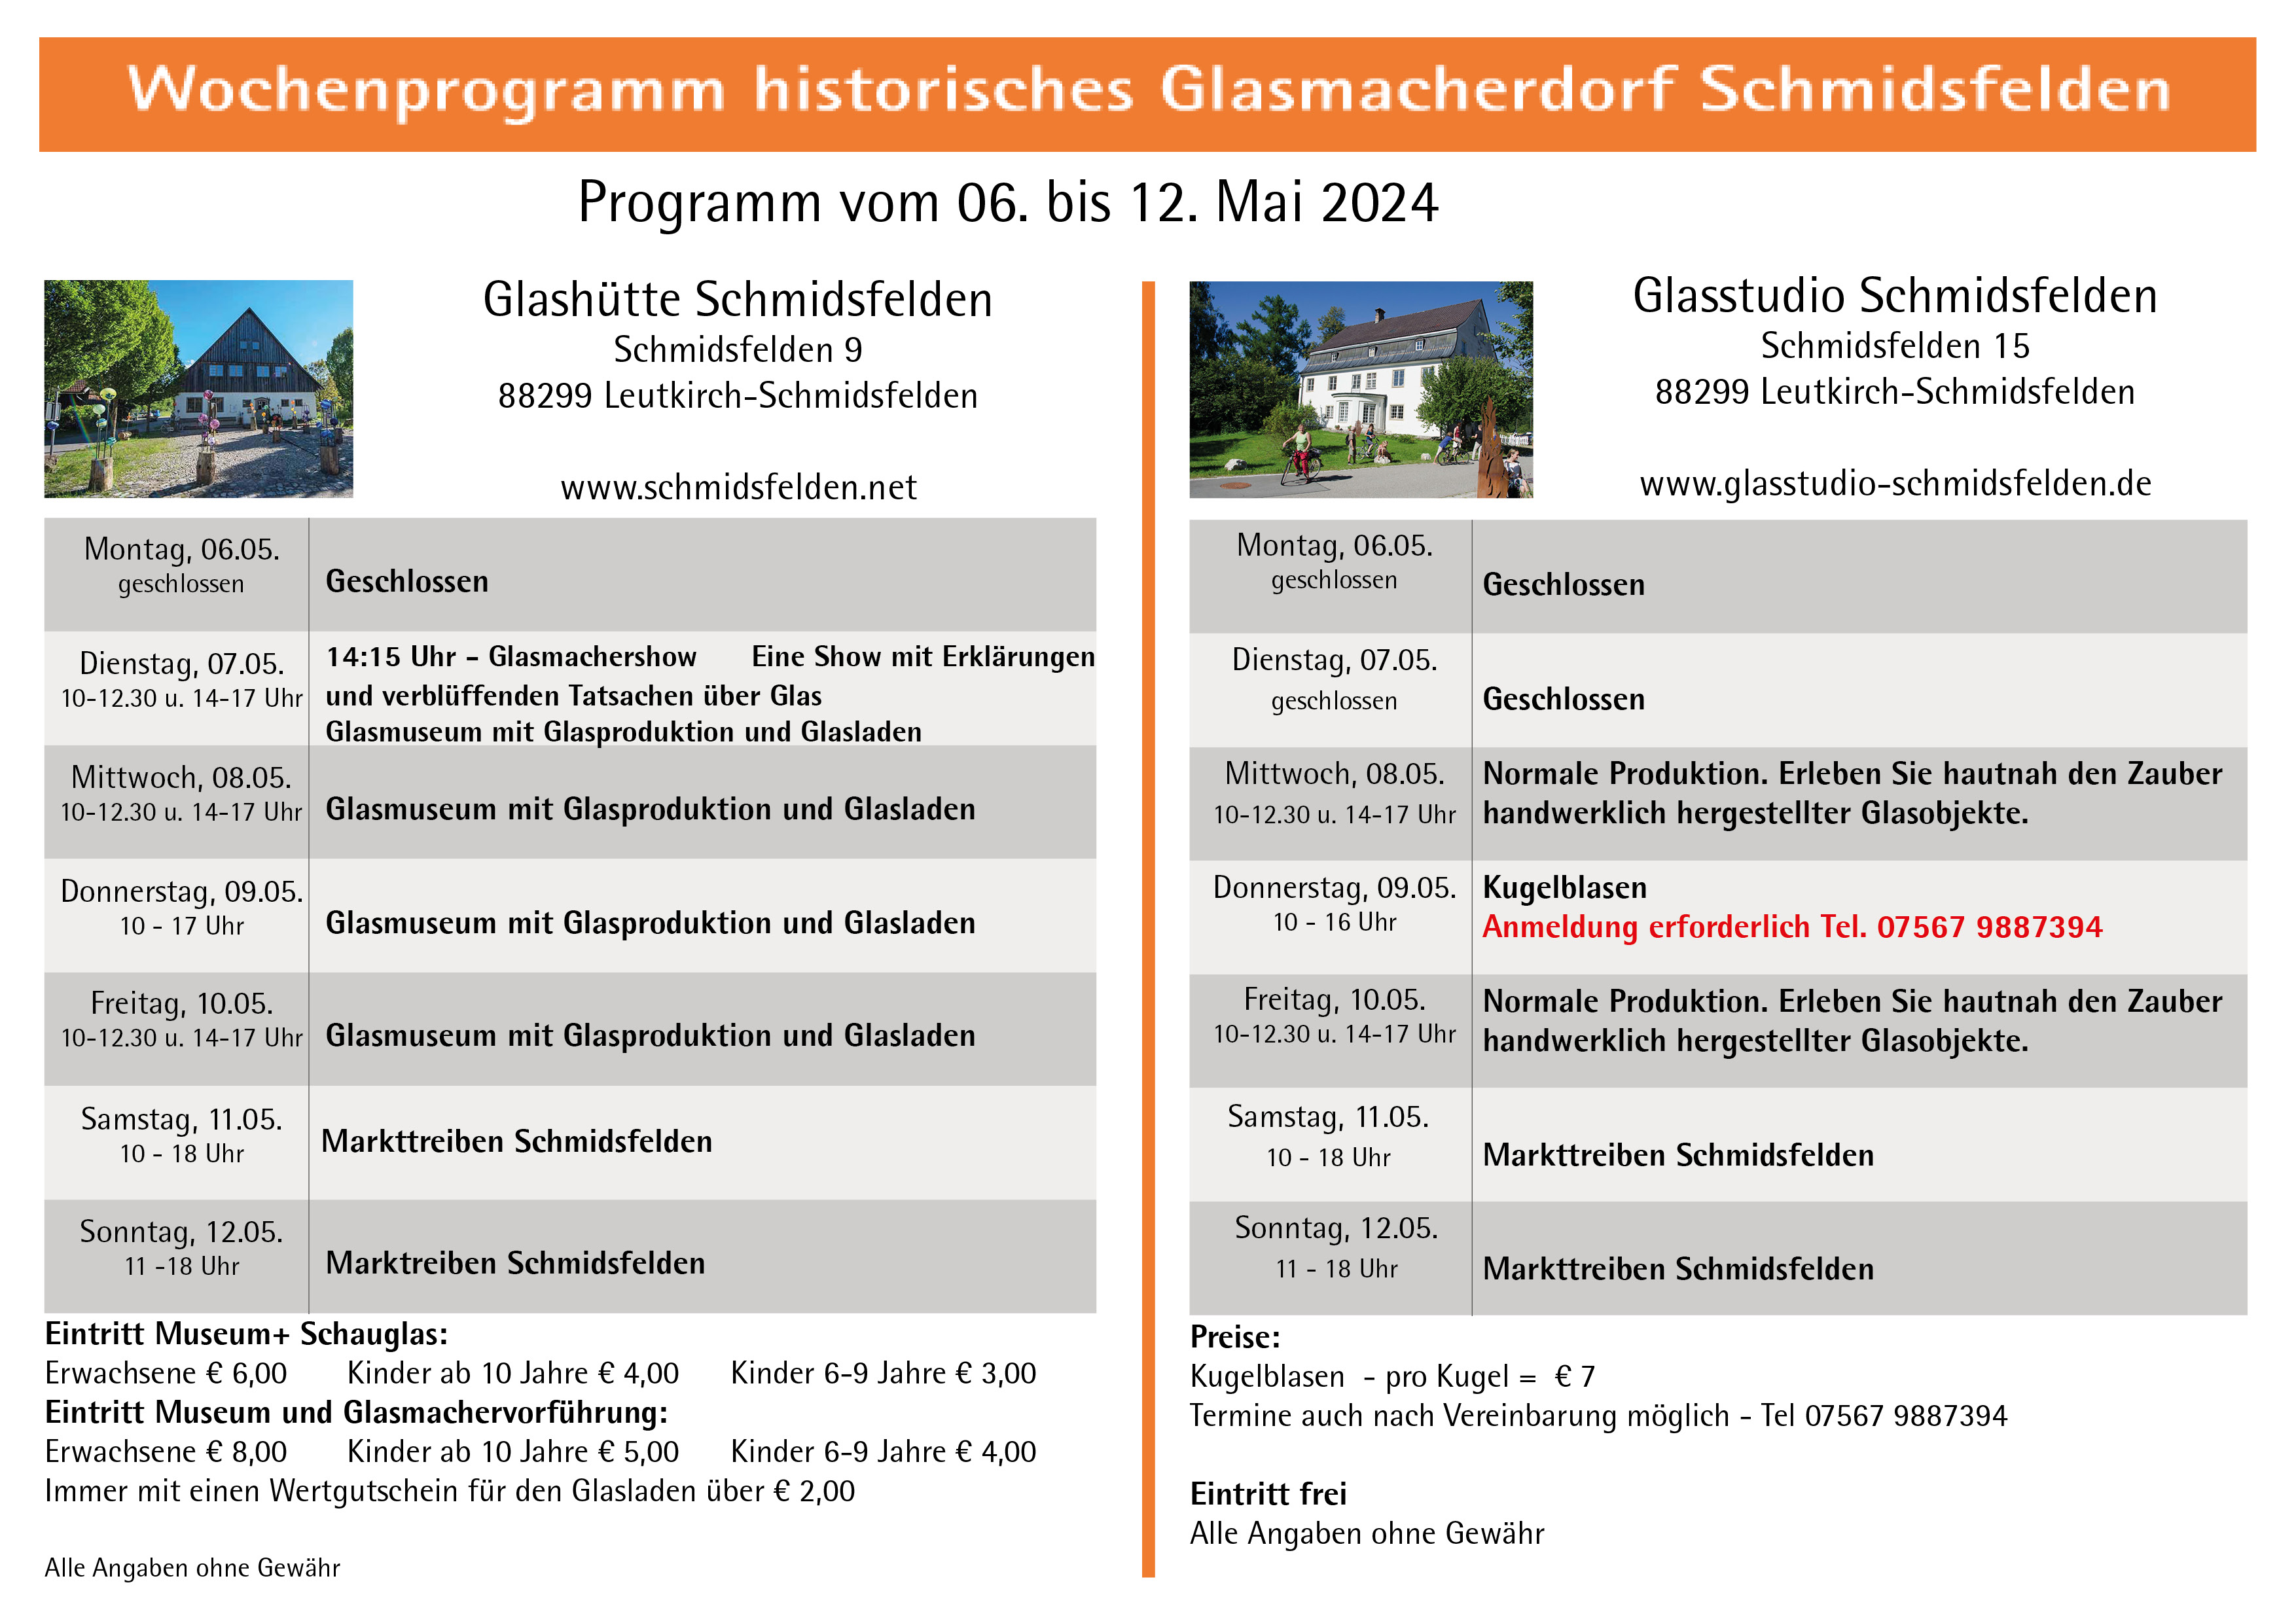 Wochenprogramm Schmidsfelden 06.05. - 12.05.2024